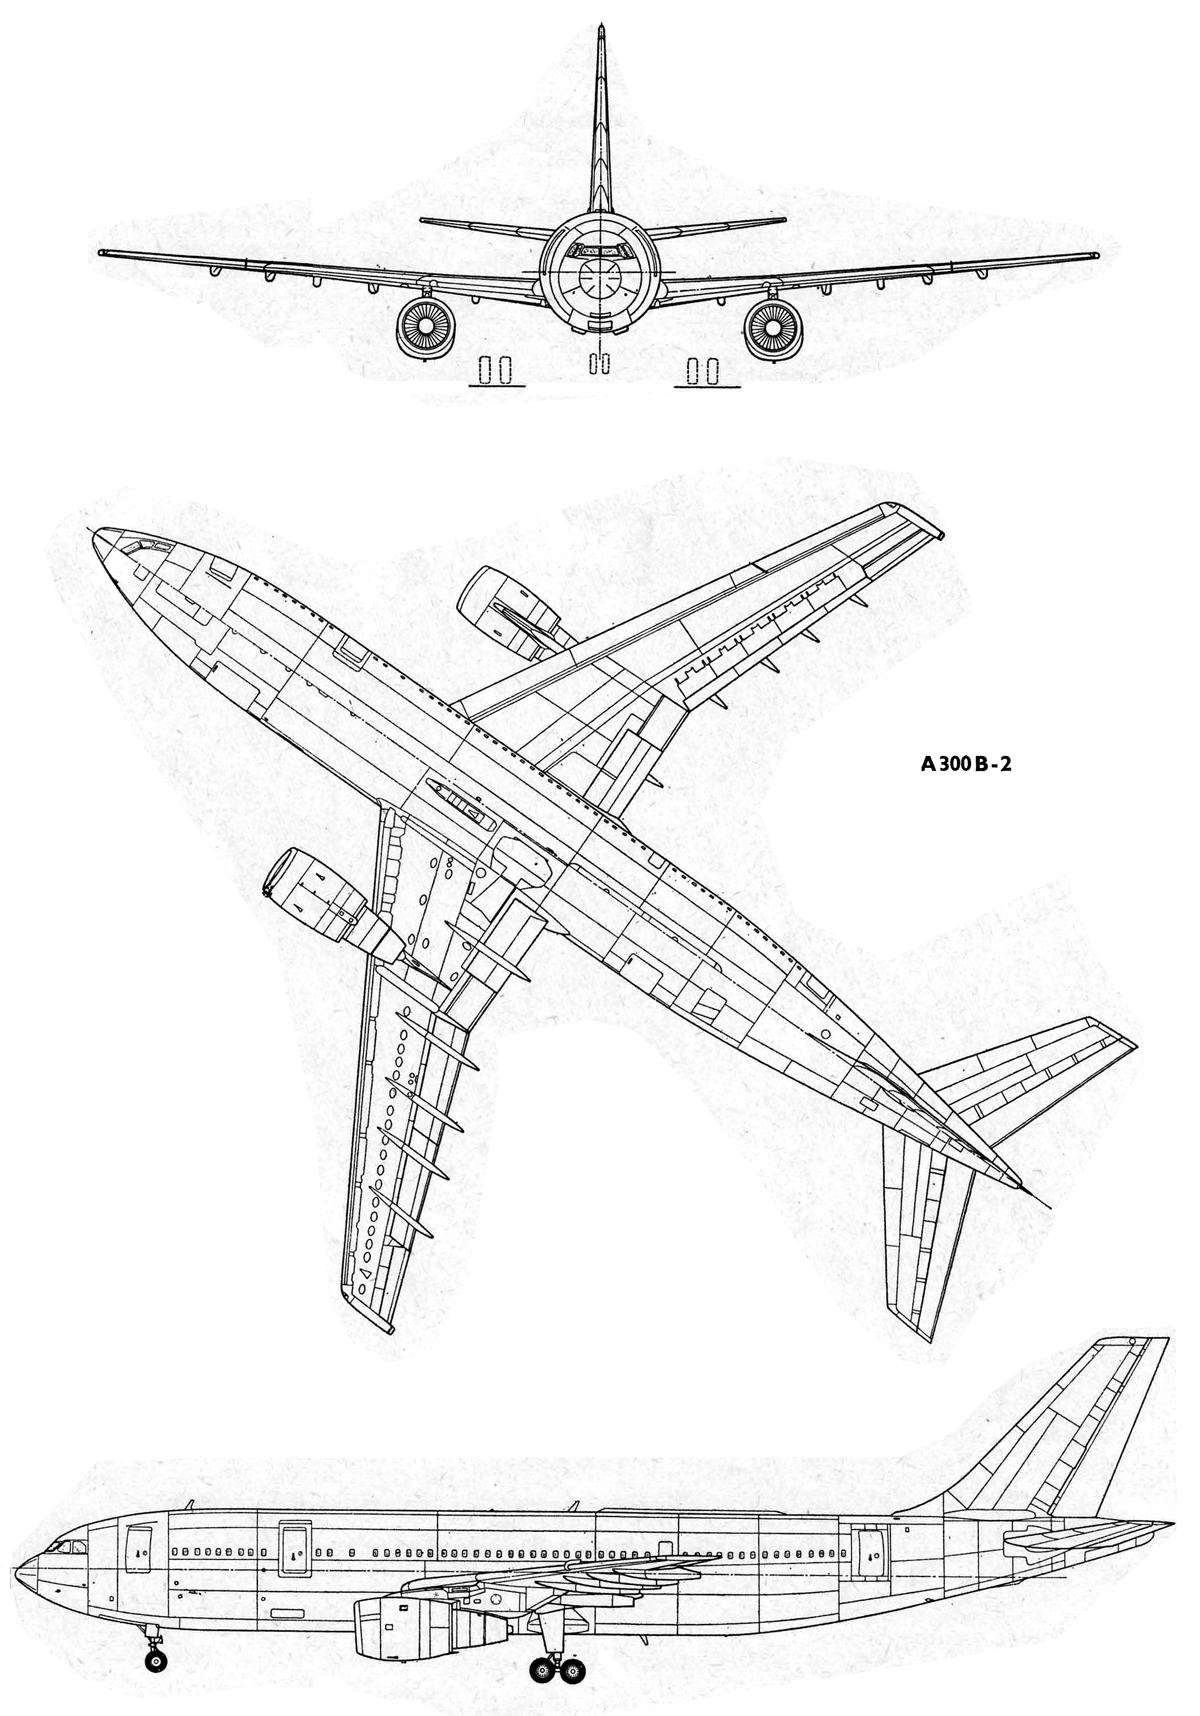 Аirbus а320: описание, компоновка салона, эксплуатирующие авиаперевозчики